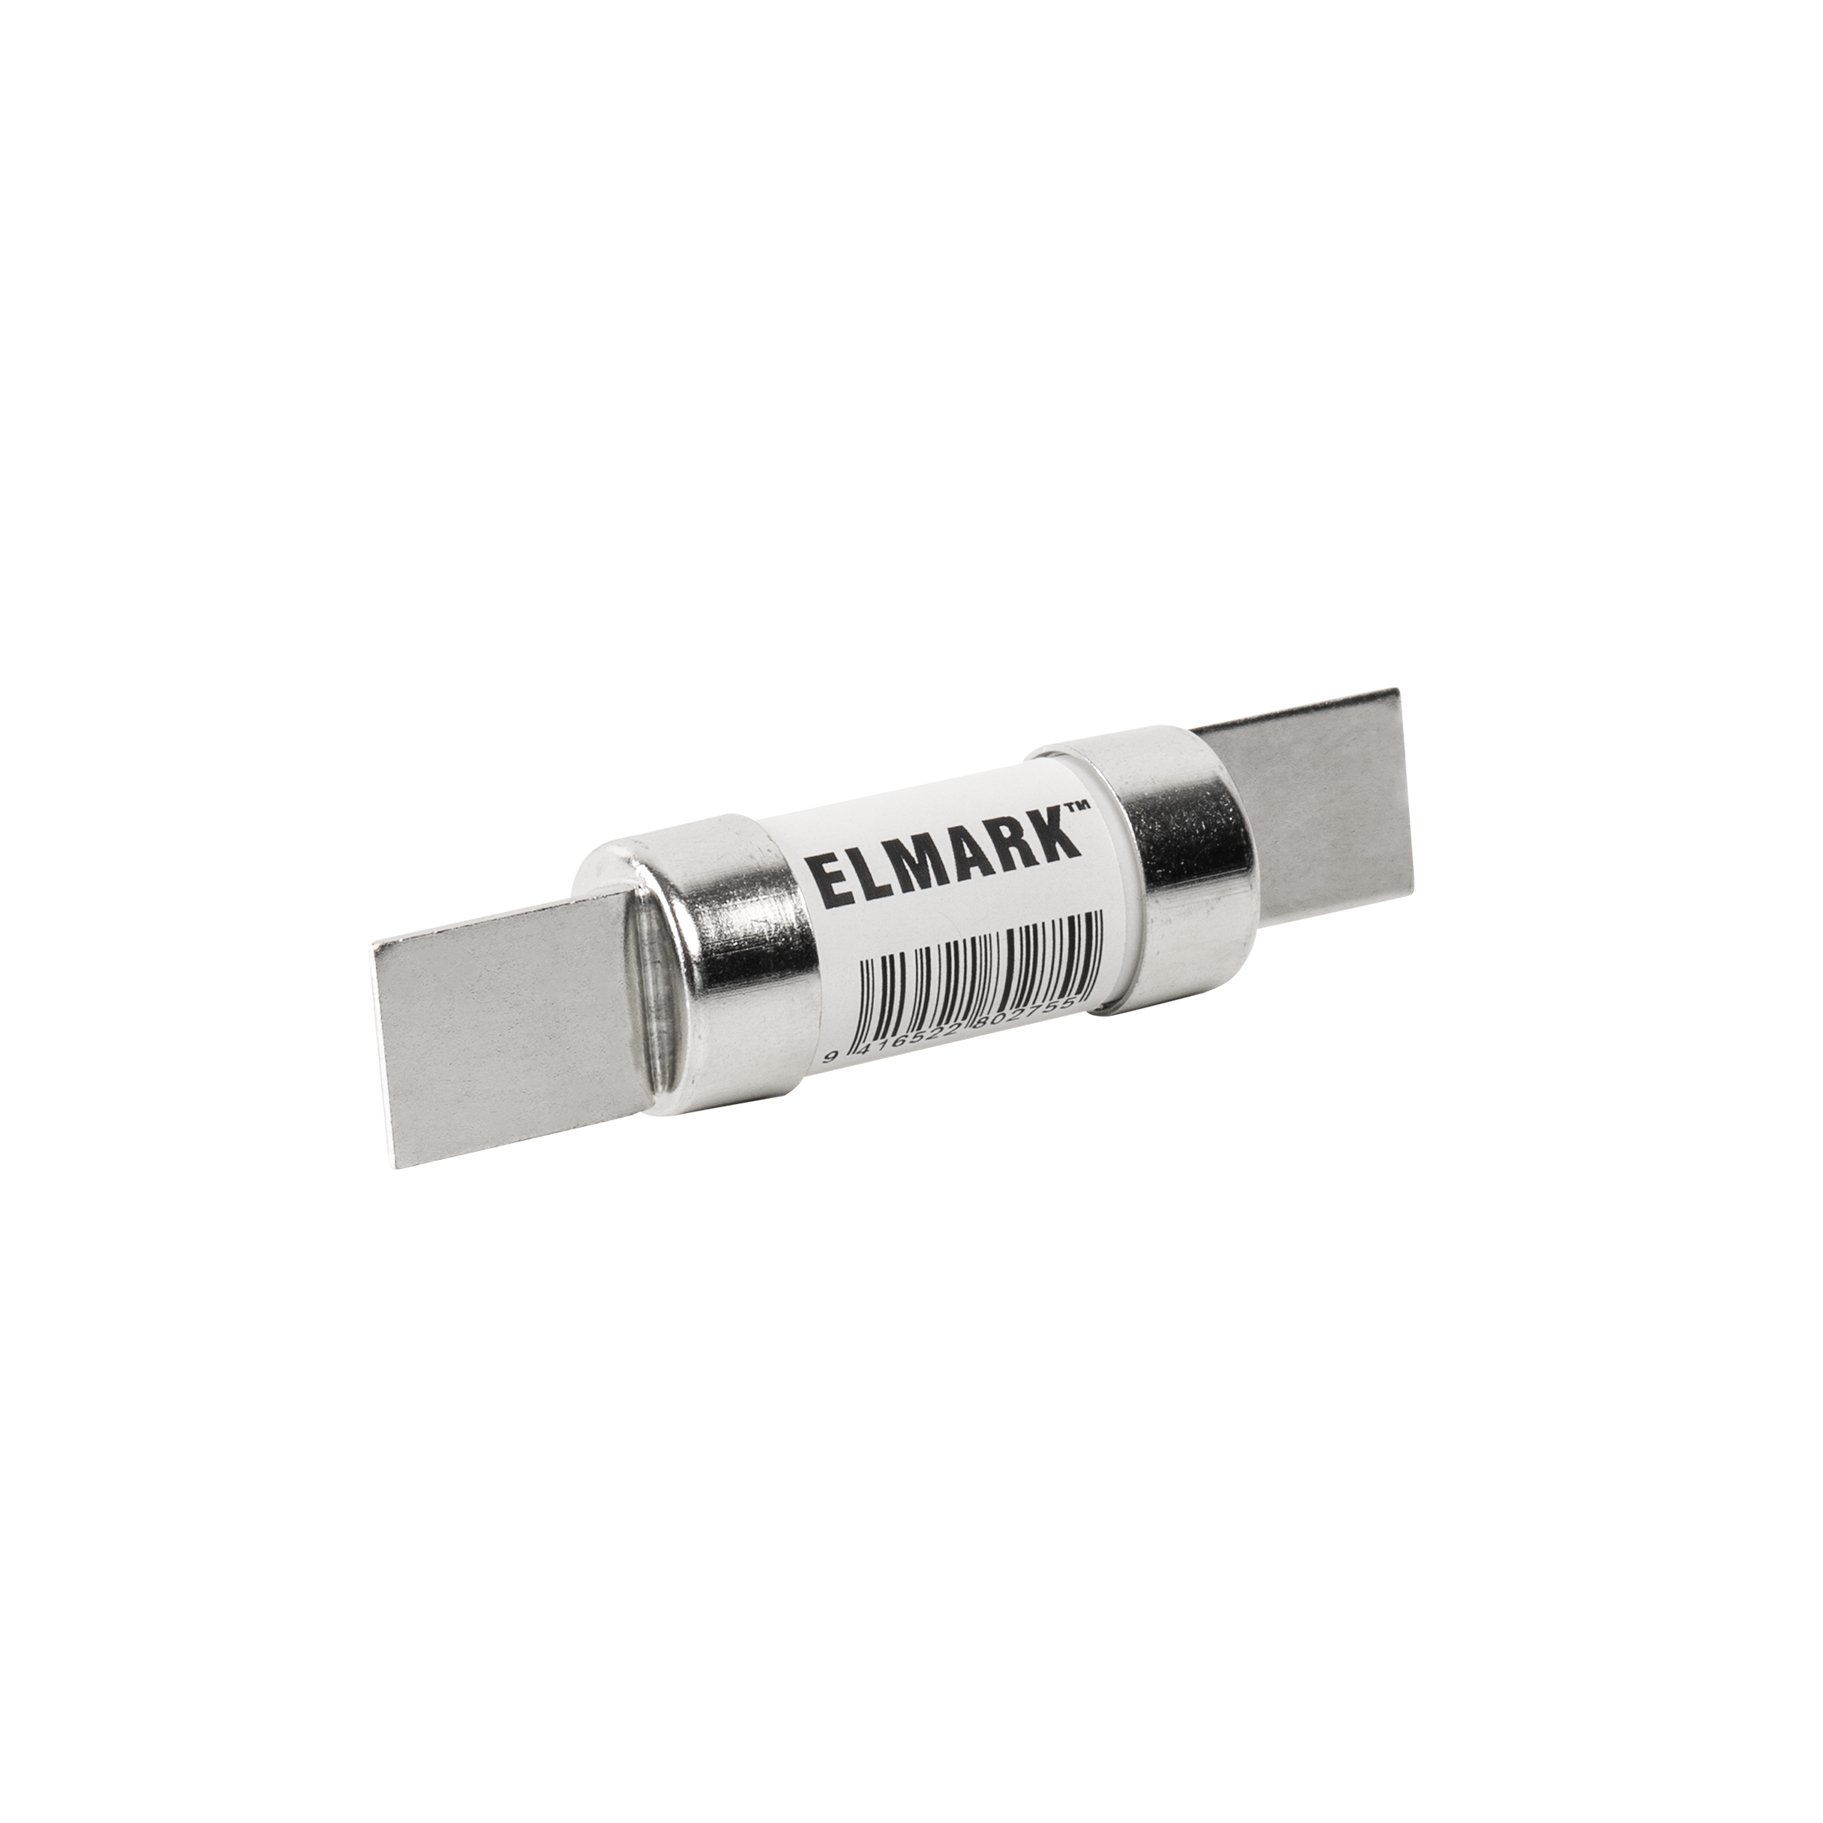 ELMARK HRC FUSE LINK STAGGERED TAG 6A 550V 6G06